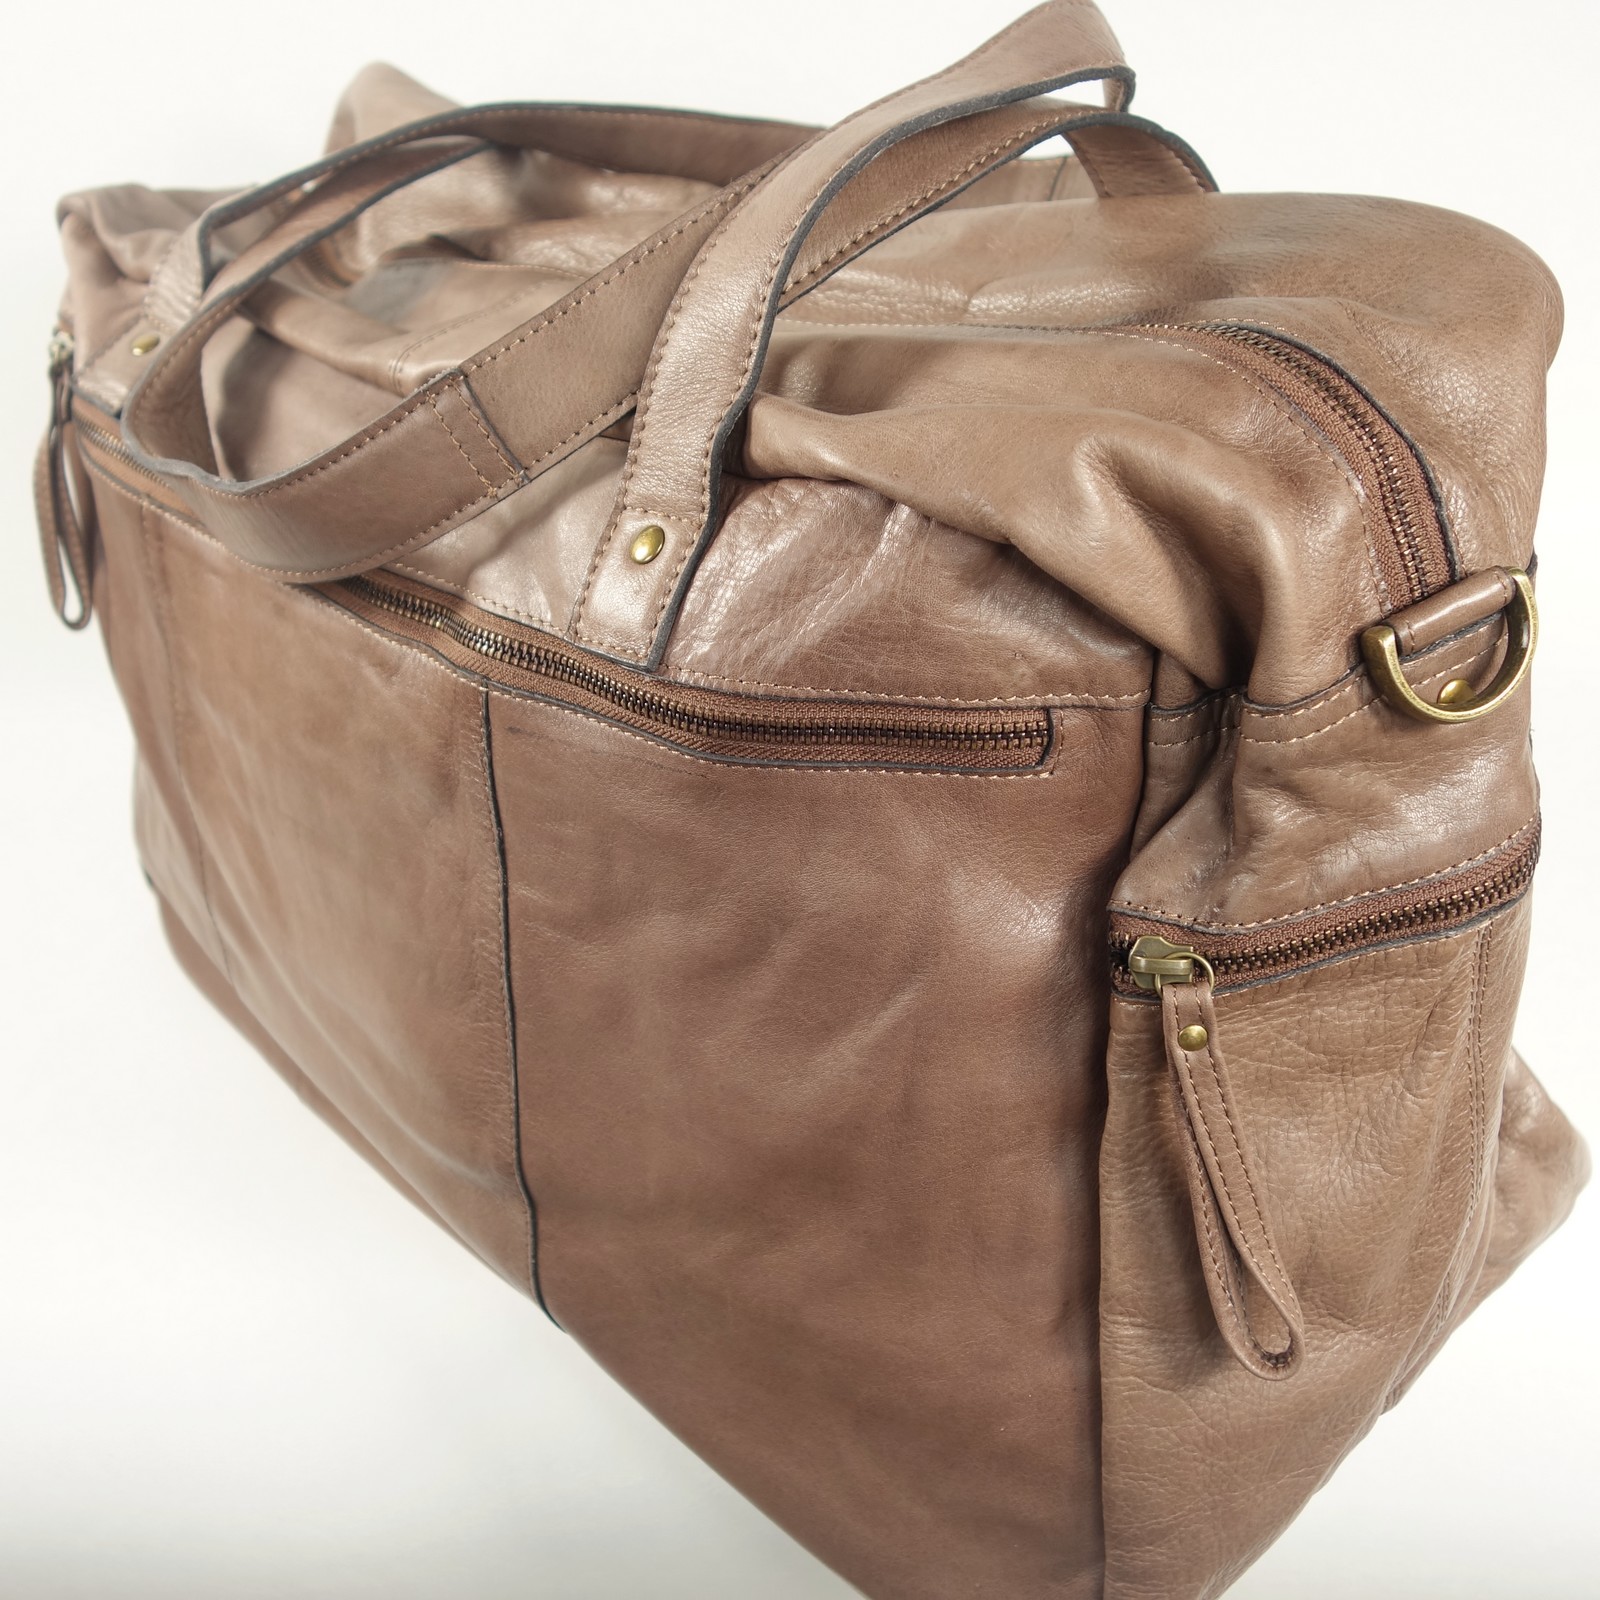 Sac de voyage femme cuir Taupe The Bag / Cowboysbag - Espritcuir